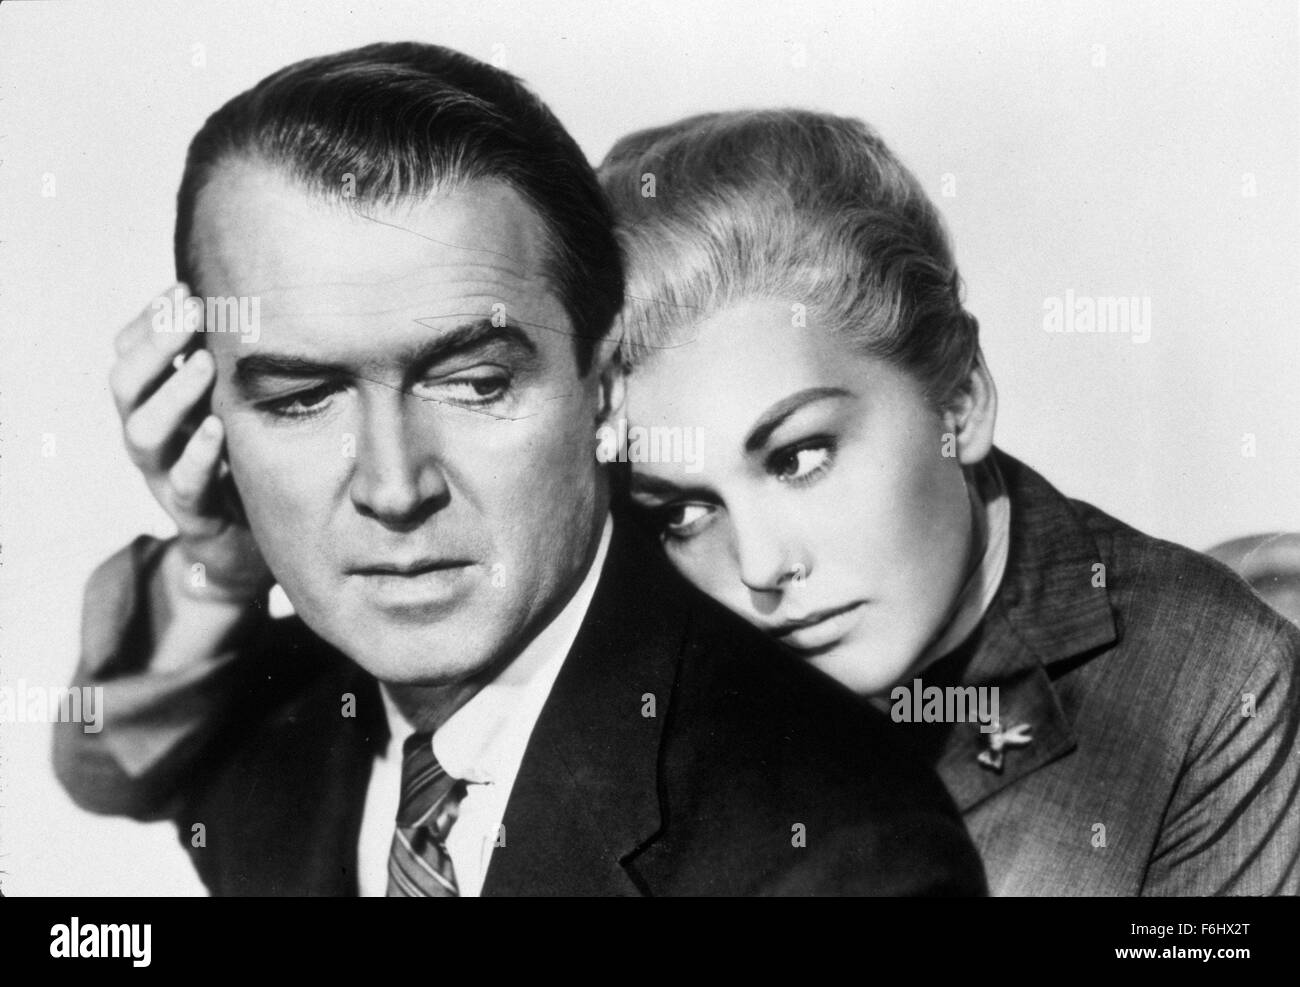 Filmtitel 1958: VERTIGO, Regie: ALFRED HITCHCOCK, Studio: PARAMOUNT, im Bild: ALFRED HITCHCOCK, KIM NOVAK. (Bild Kredit: SNAP) Stockfoto